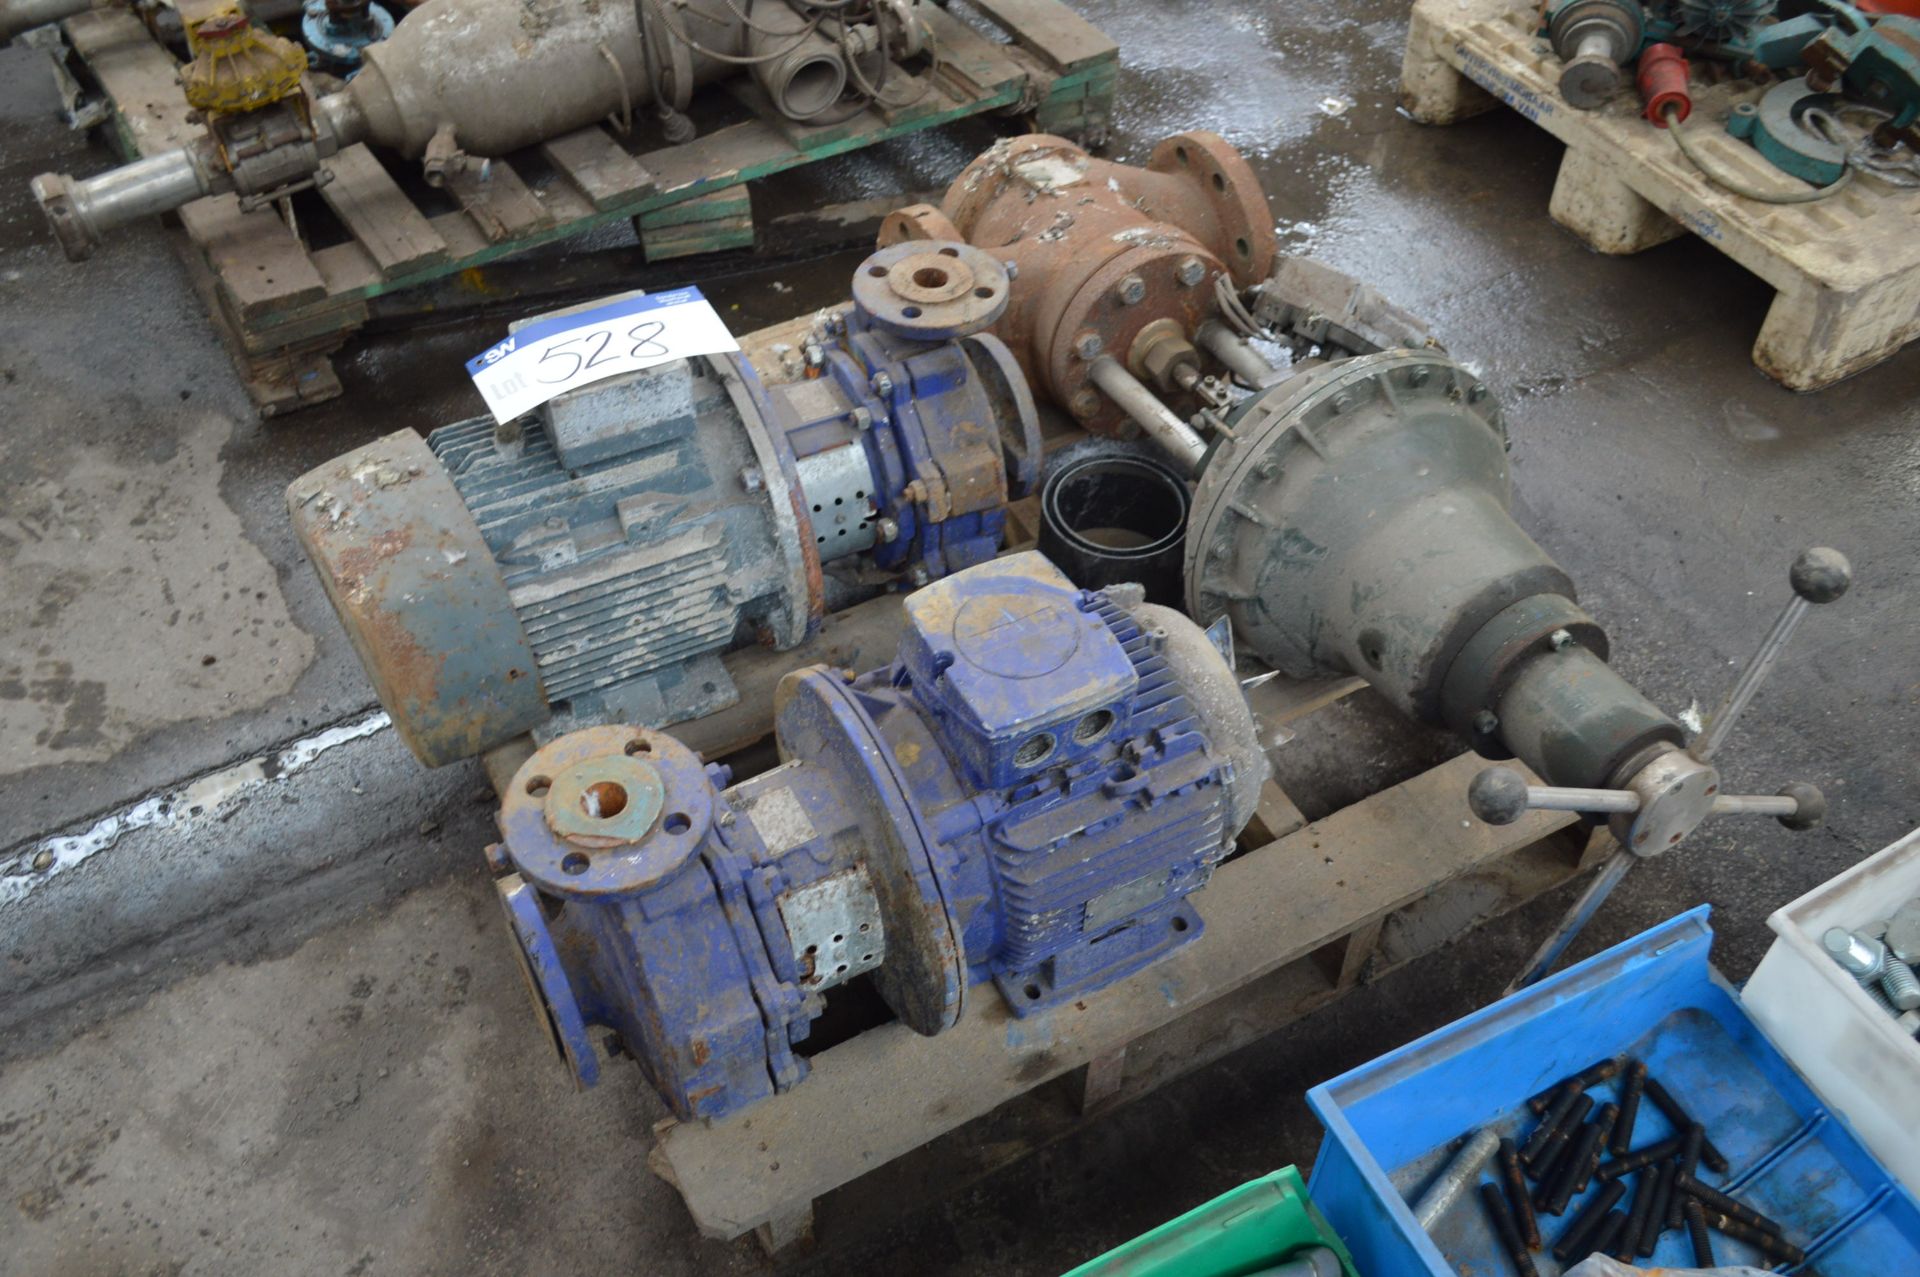 Assorted Pumps & Equipment, on pallet